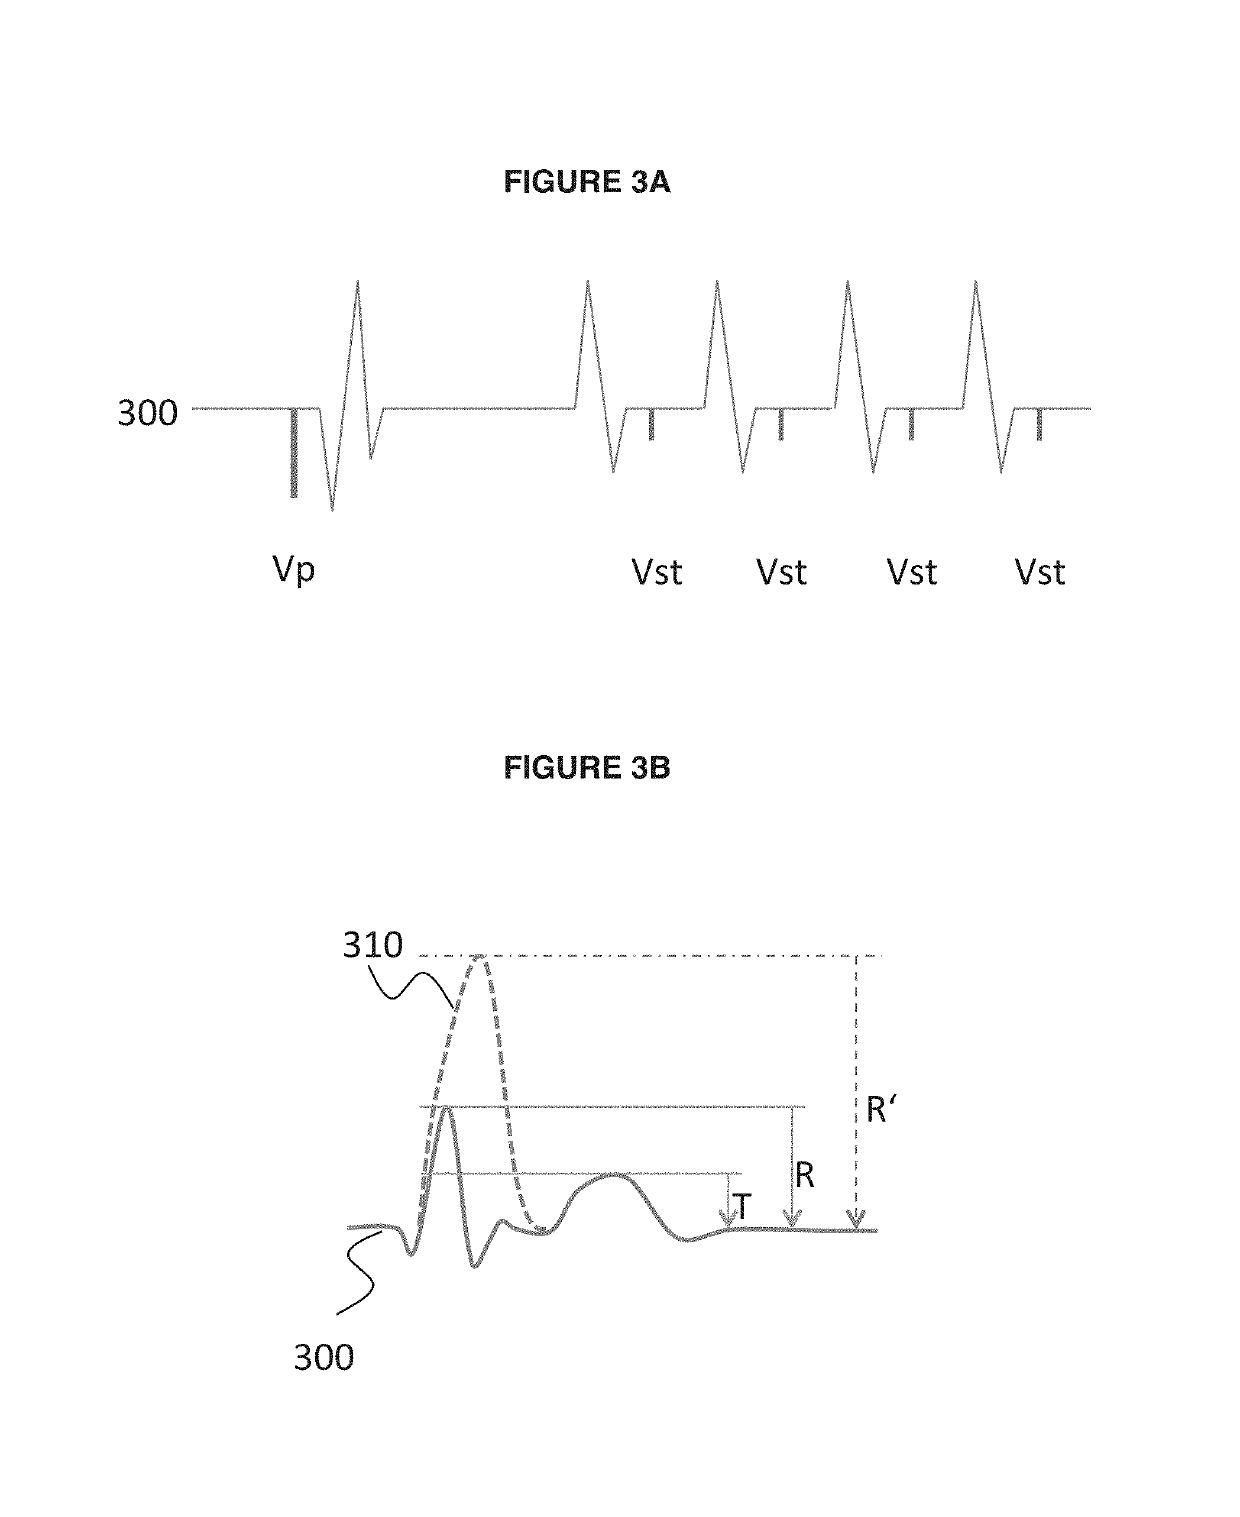 Implantable cardiac system having an R-spike amplifier